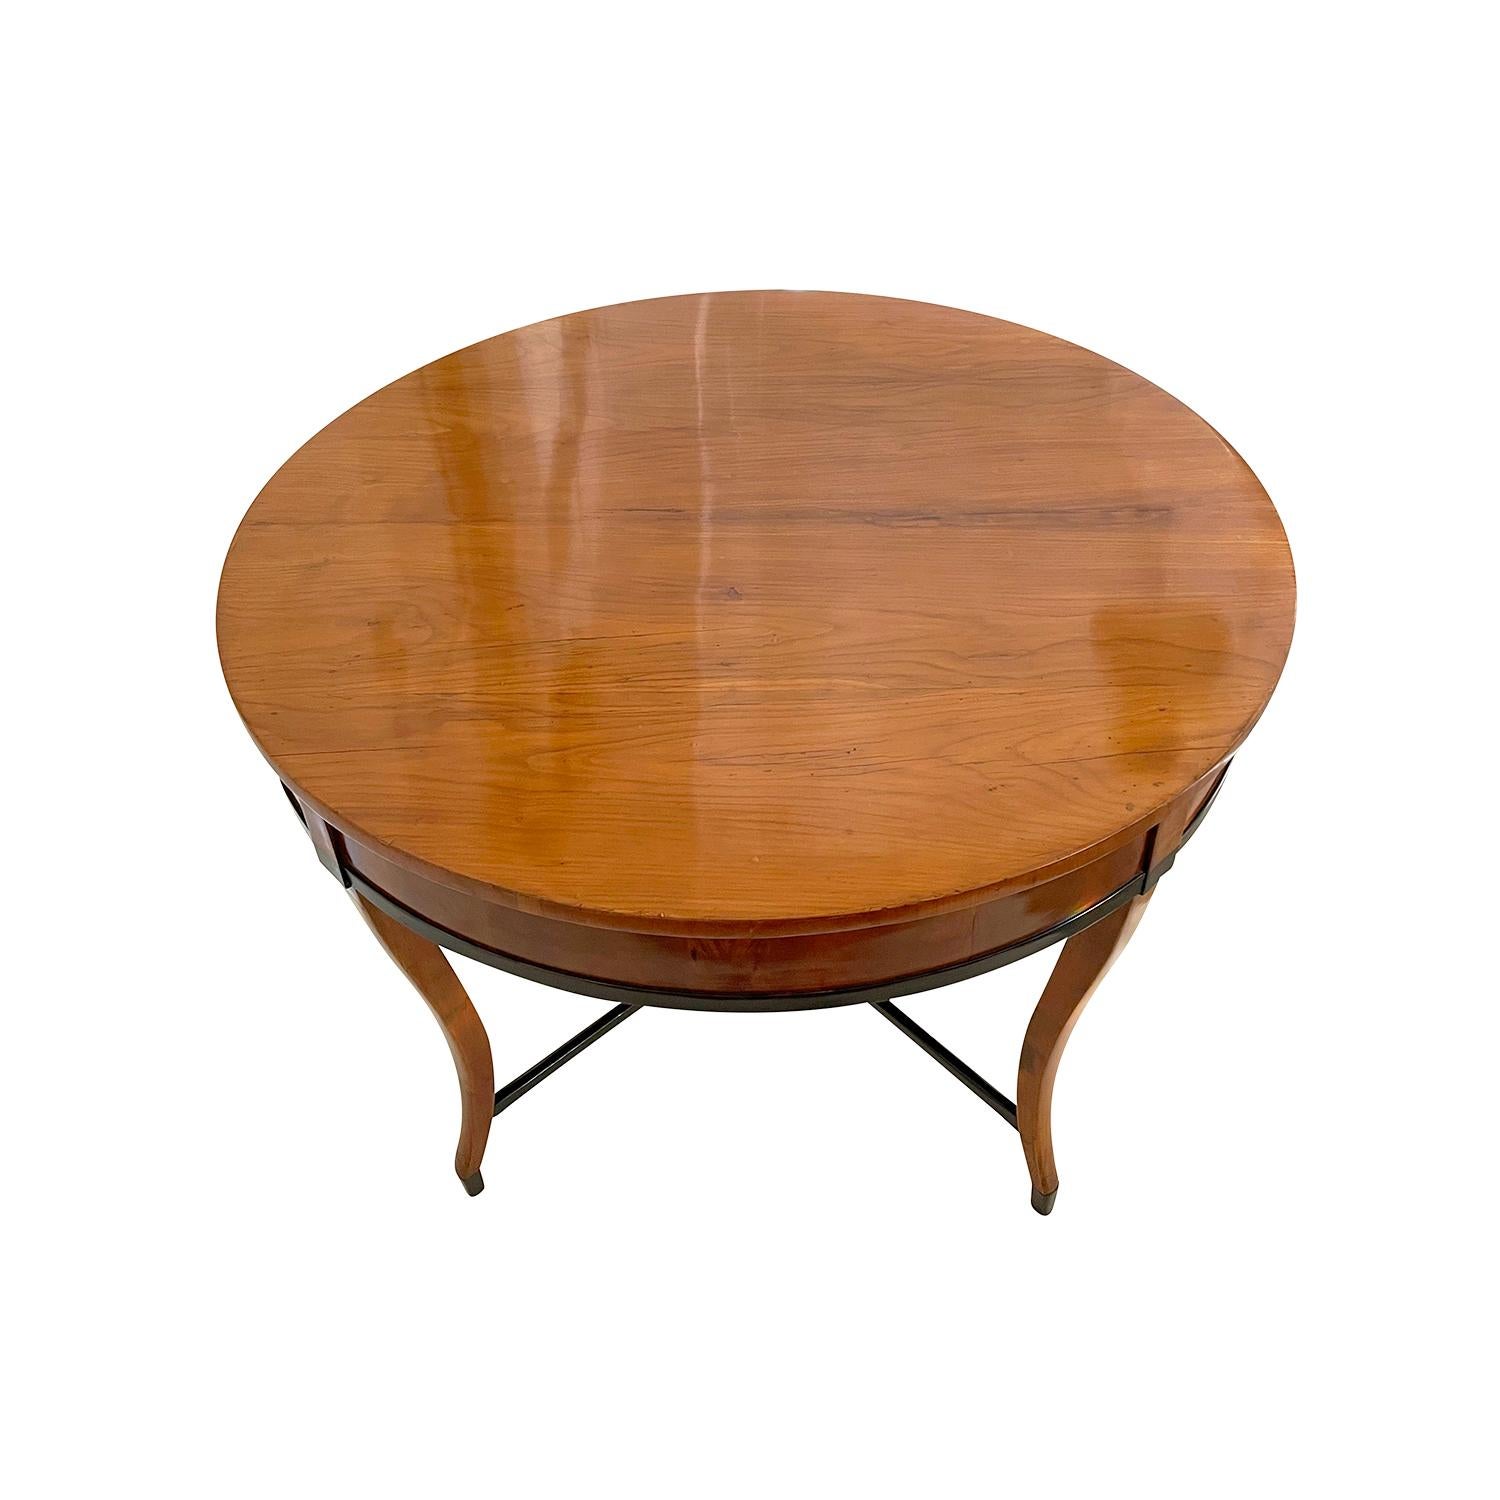 19th Century German Biedermeier Antique Round Cherrywood Dining Room Table For Sale 1